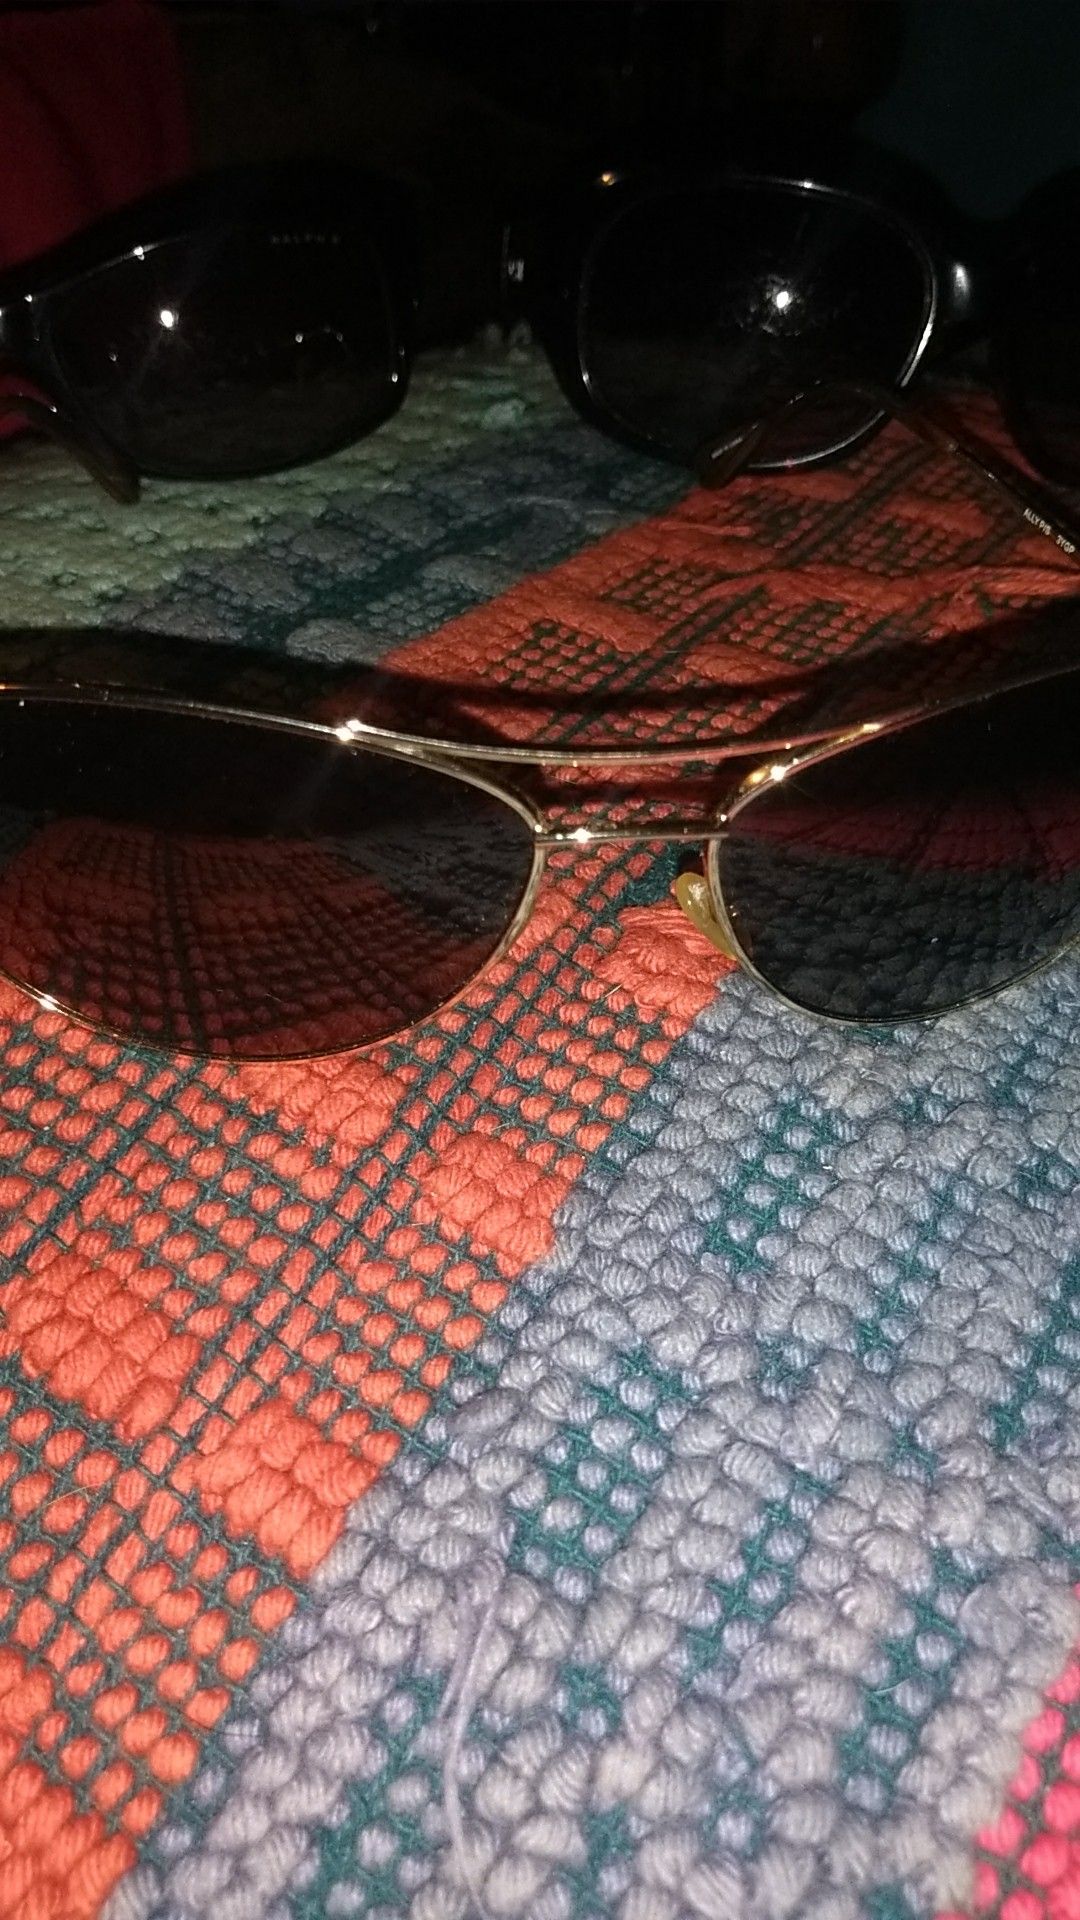 Sunglasses for sale